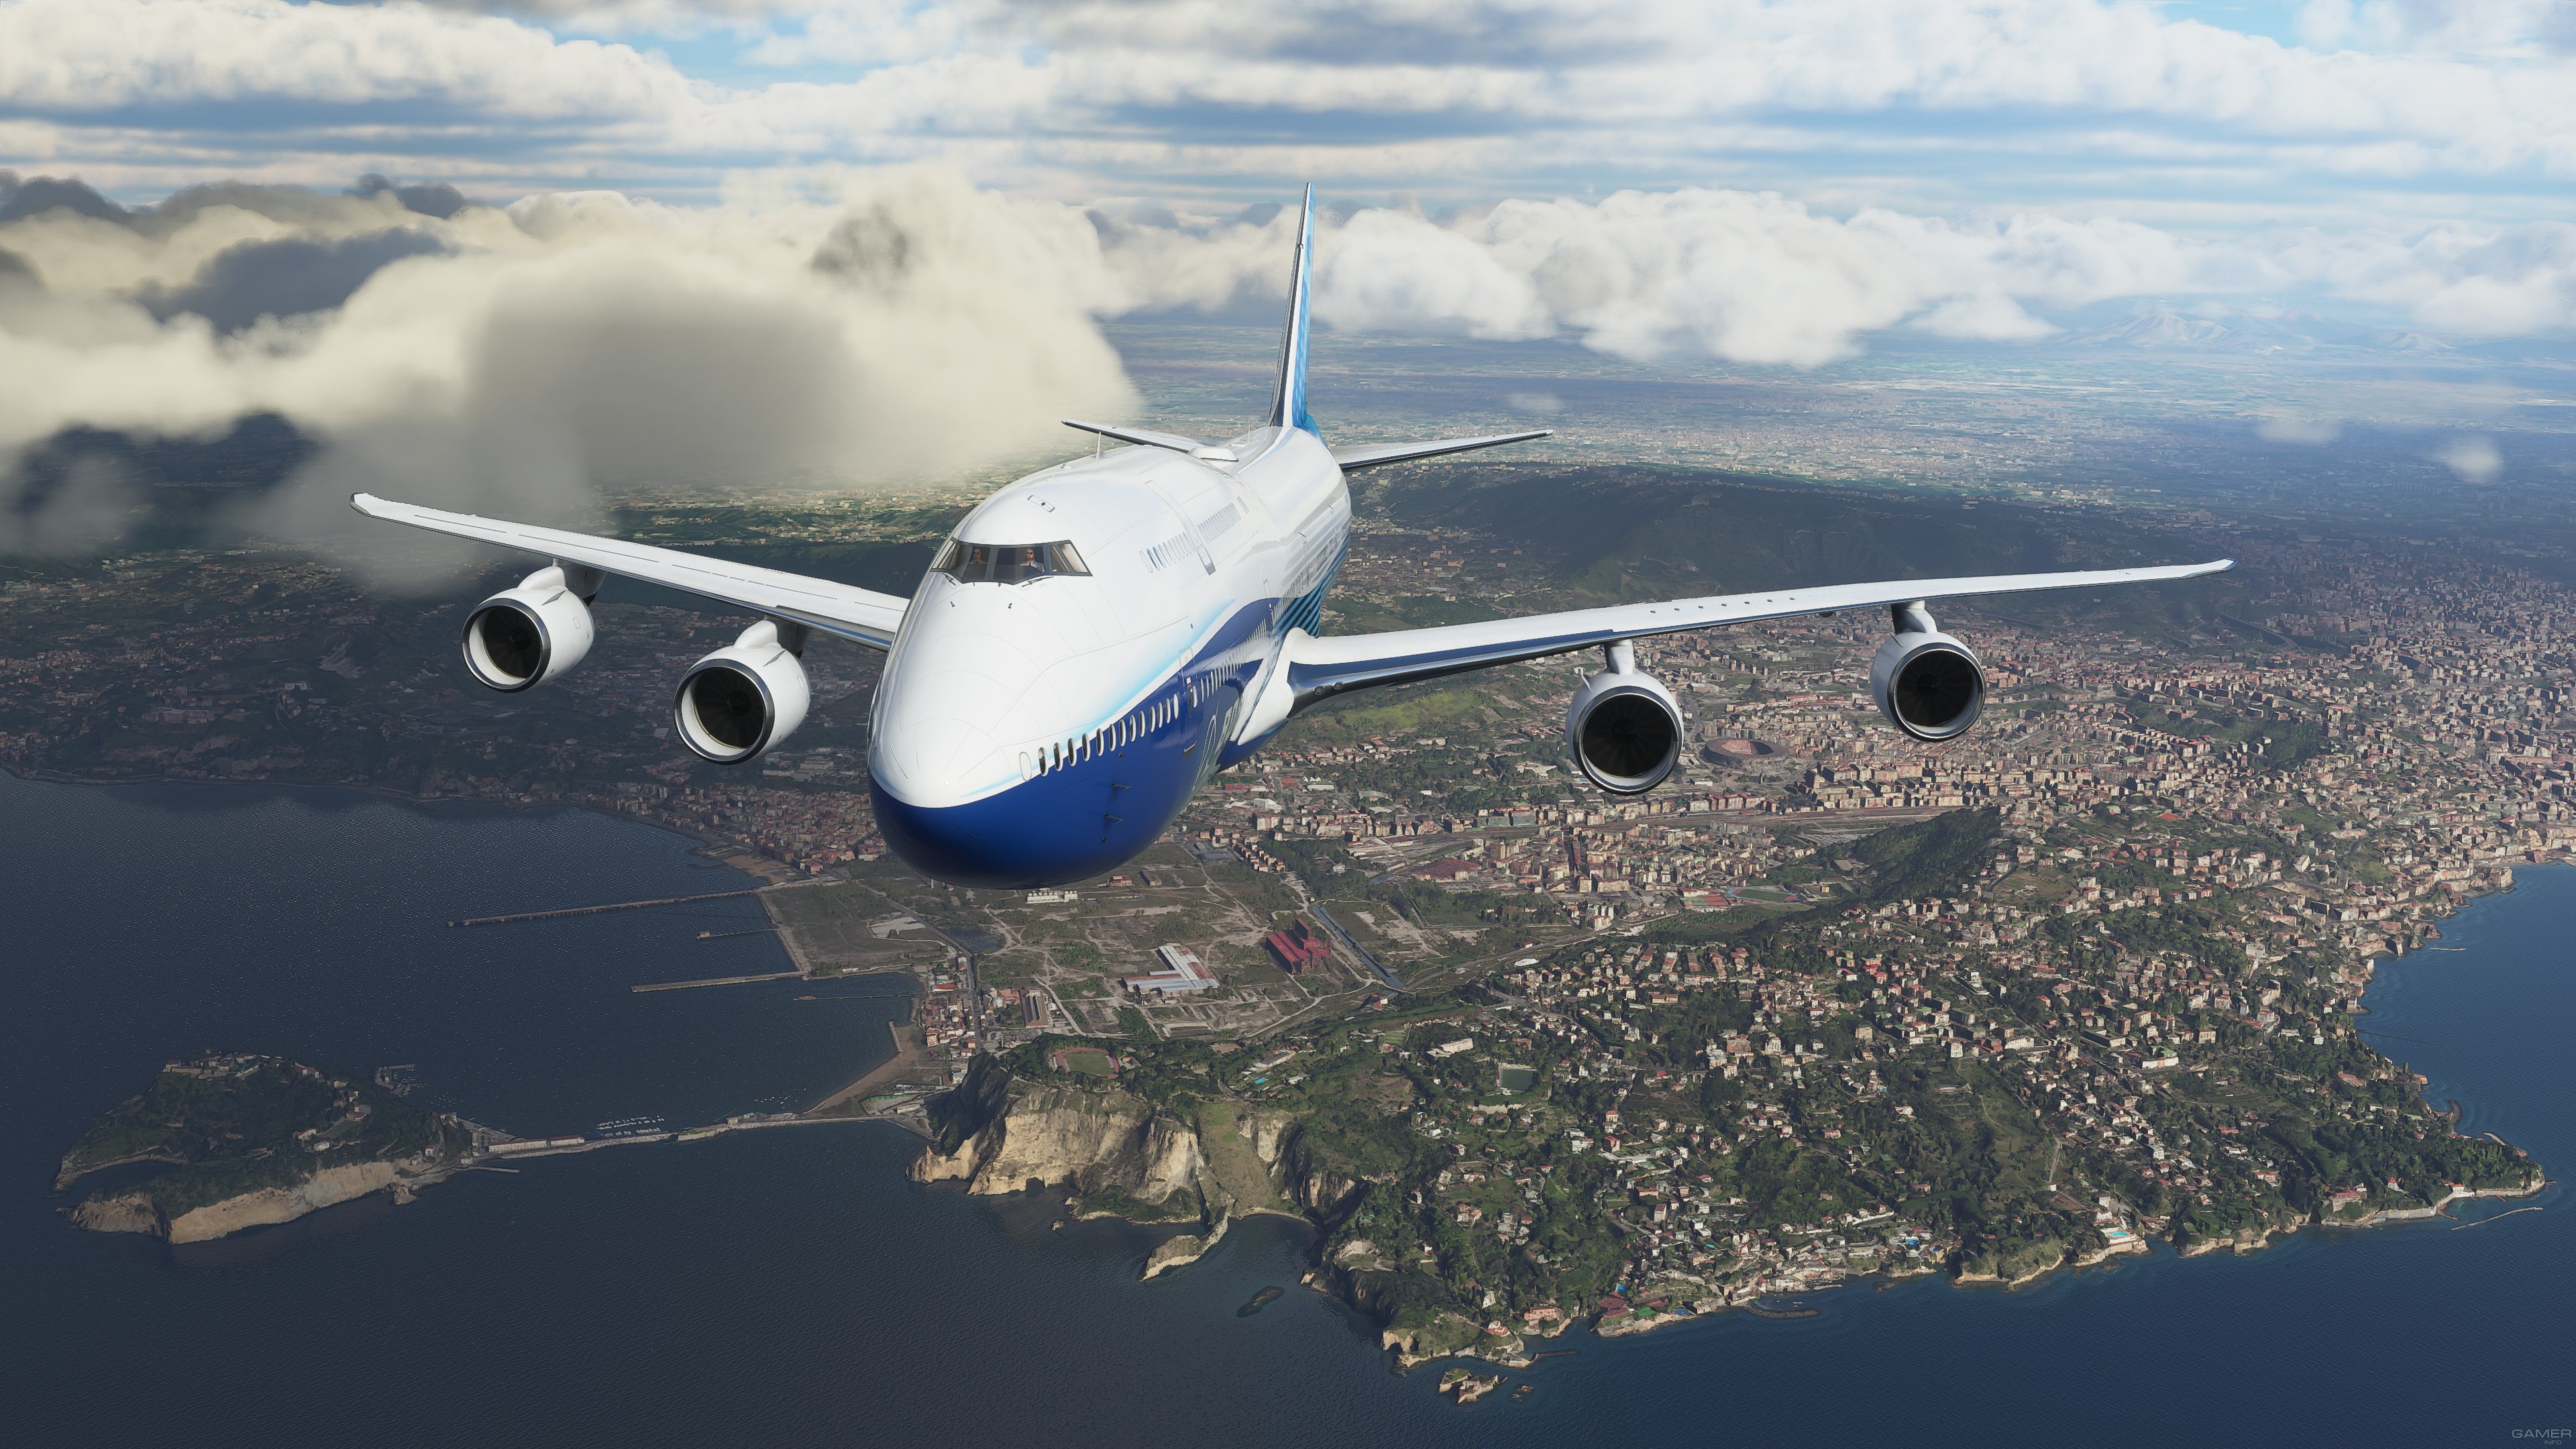 Microsoft Flight Simulator: The Future of Game Development